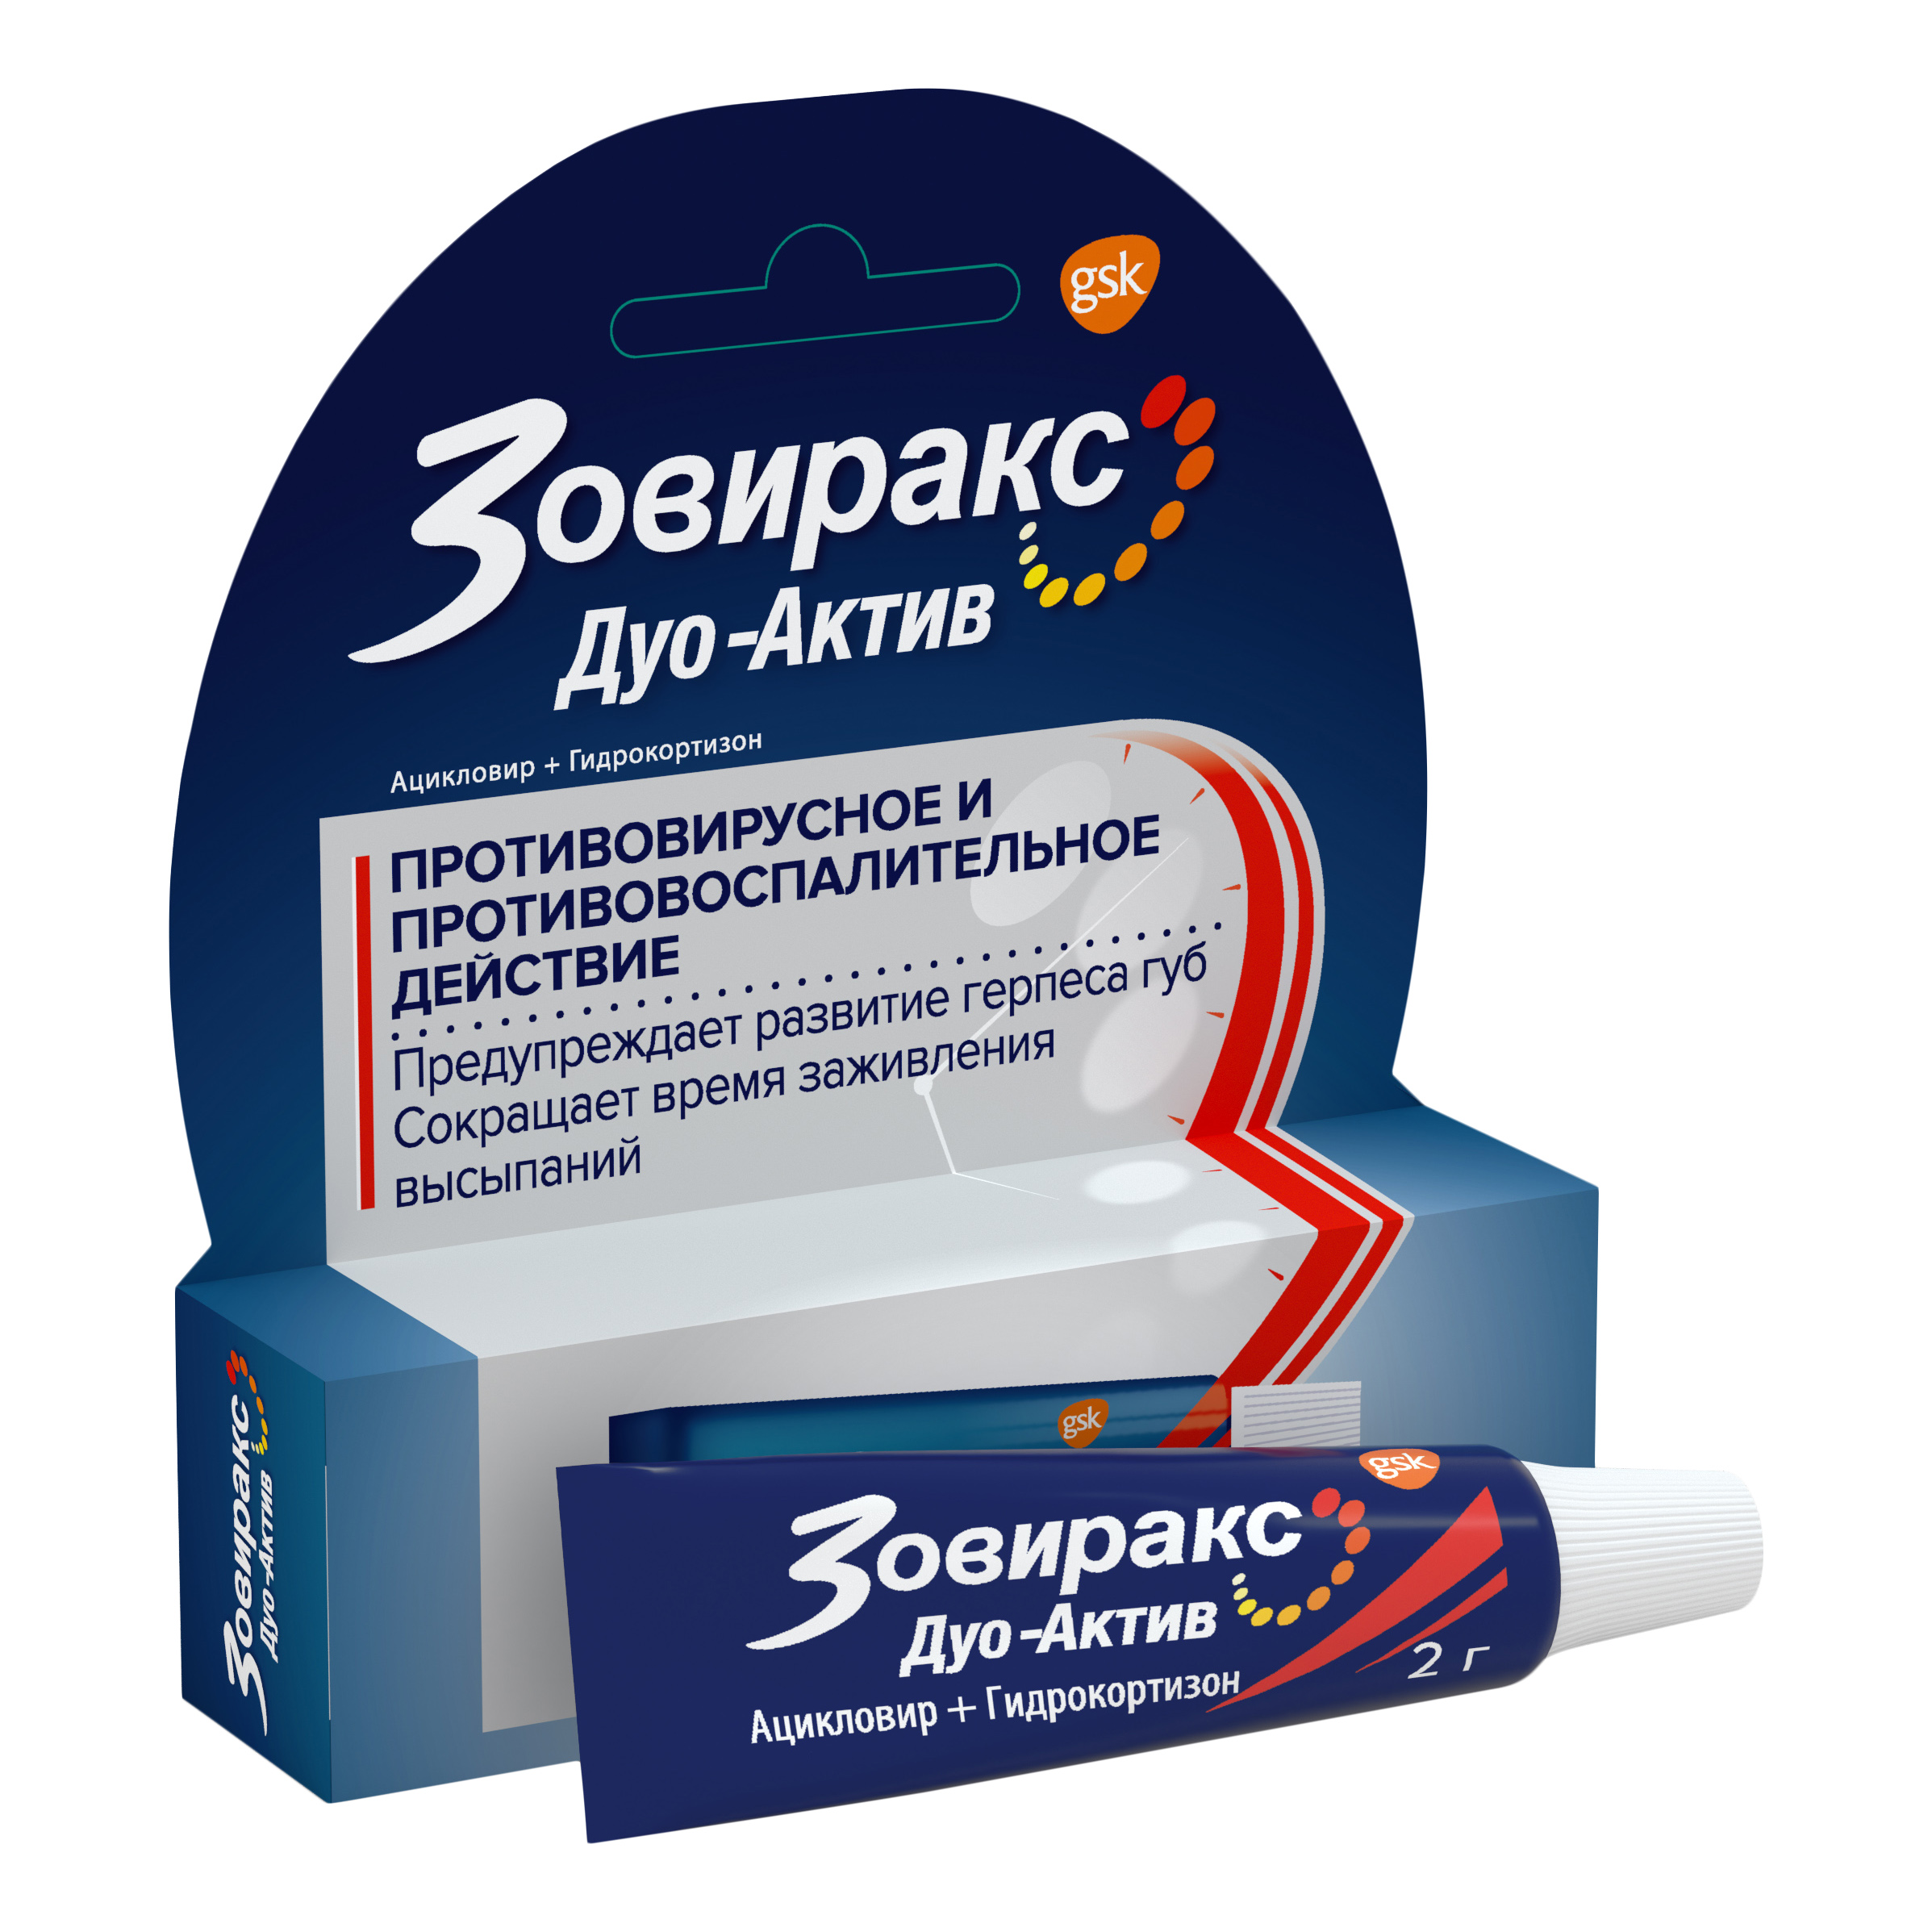 Зовиракс ДУО-АКТИВ крем от простуды на губах, противовирусное средство, ацикловир+гидрокортизон, 2 г ацикловир сандоз 5% крем для наружного применения 2 г